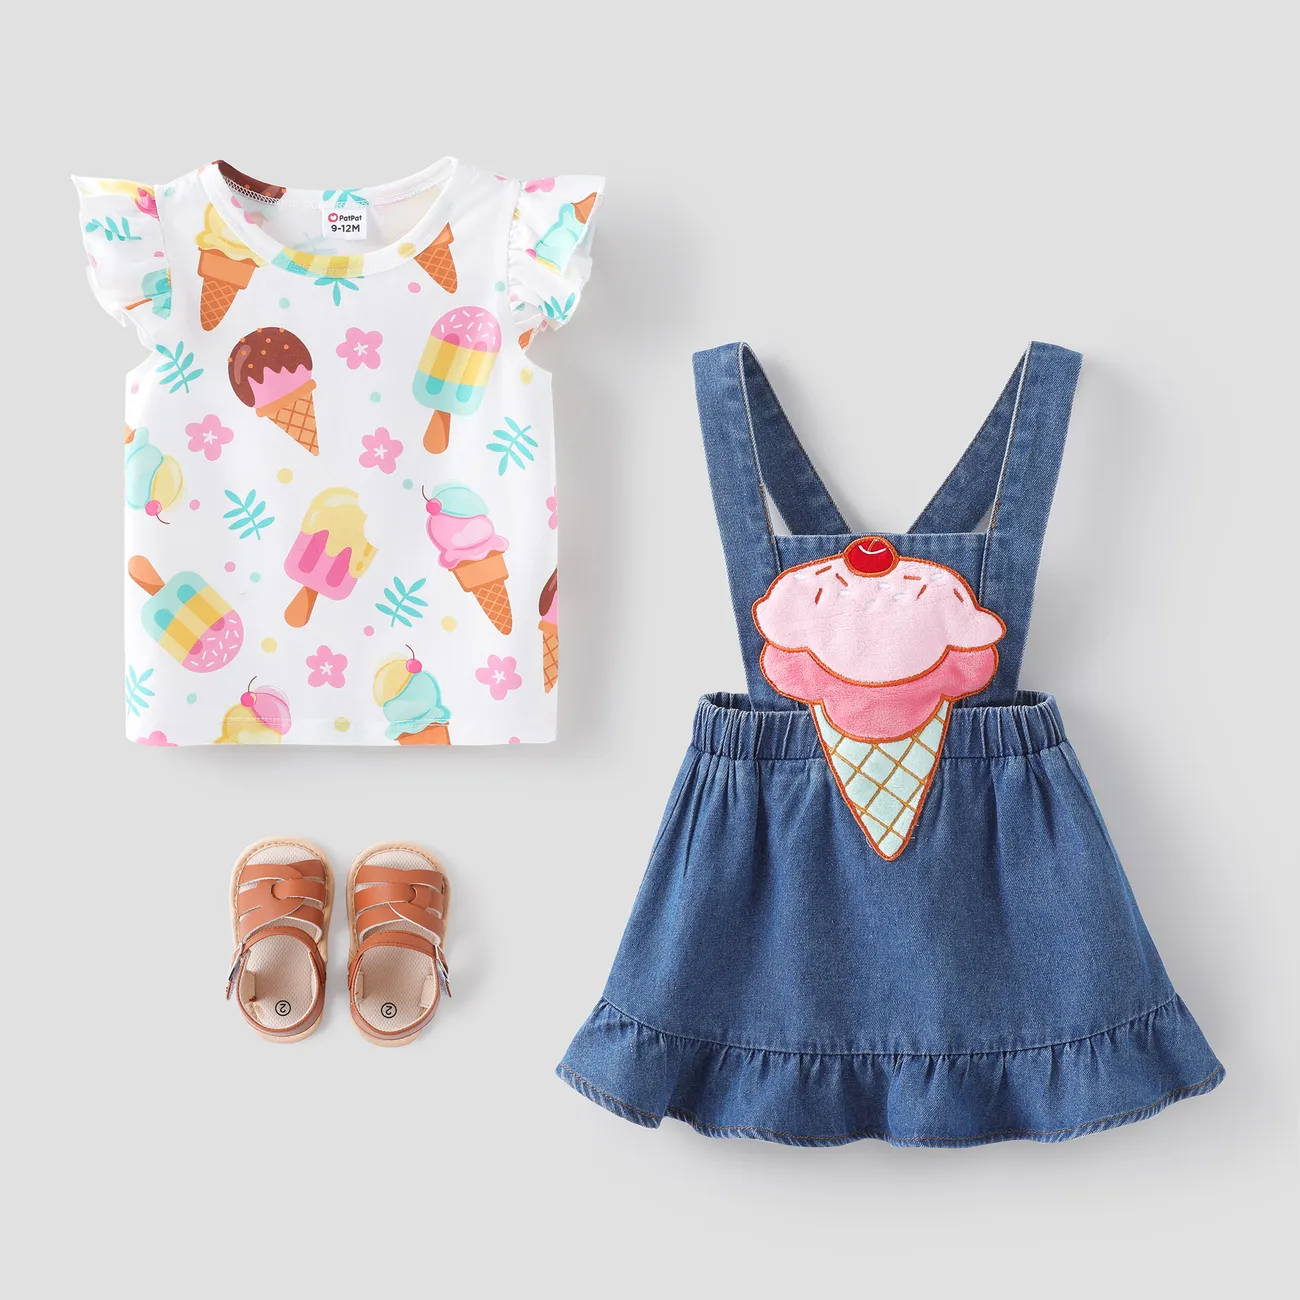 Baby/Toddler Girl 2pcs Ice Cream Print Tee and Embroidery Overall Dress Set DENIMBLUE big image 1